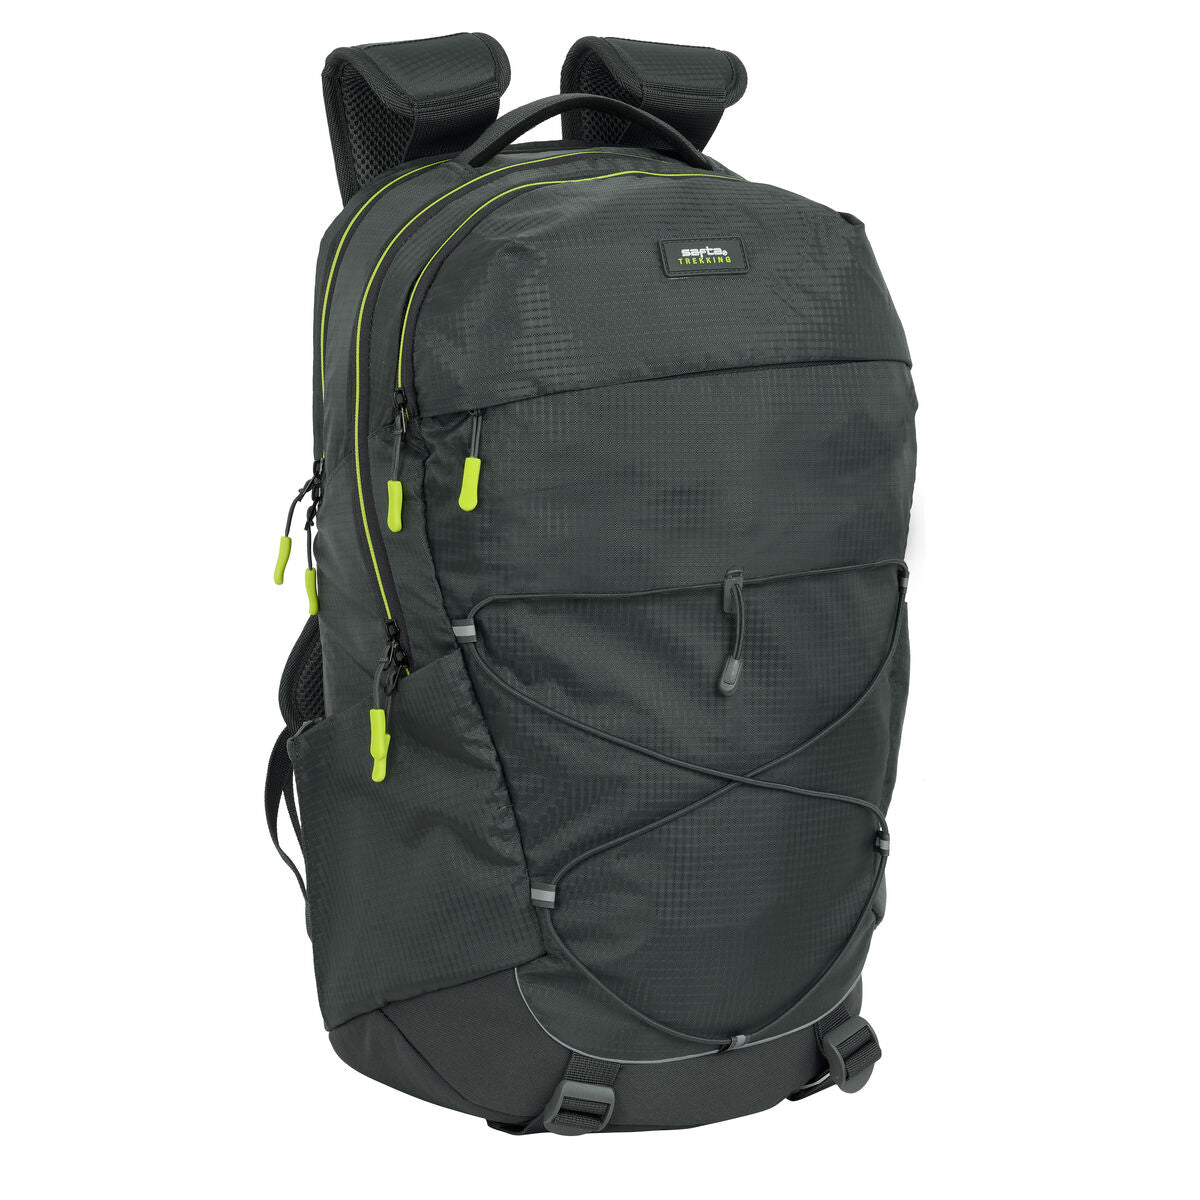 Mountain Backpack Safta 25 L 30 x 52 x 16 cm